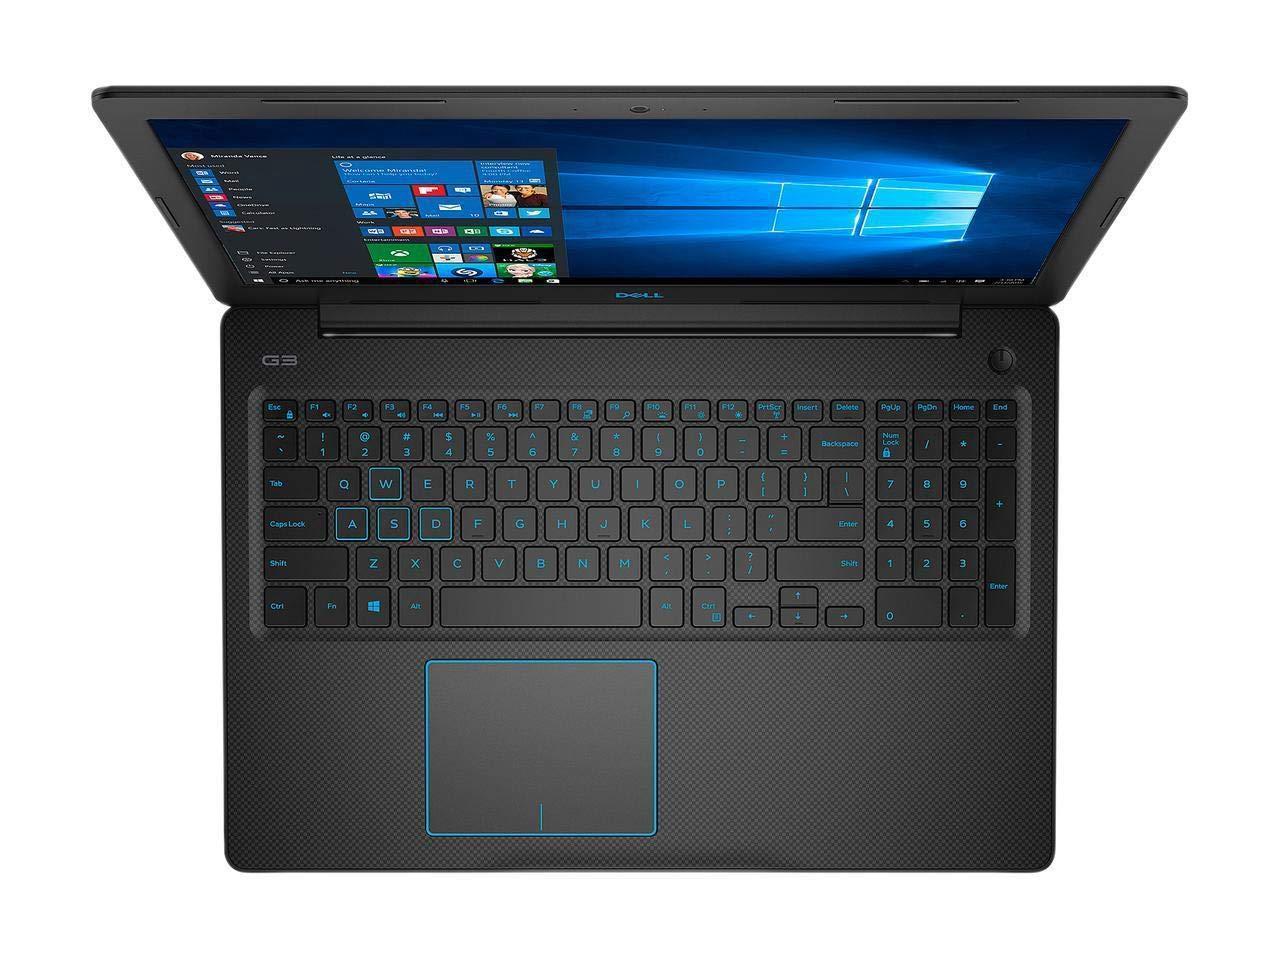 Newest Dell 15.6" FHD IPS High-Performance Gaming Laptop | Intel Core i5-8300H Quad-Core| 12GB DDR4 RAM |256G Solid State Drive |NVIDIA GeForce GTX 1050Ti 4GB |Backlit Keyboard | MaxxAudio|Windows 10